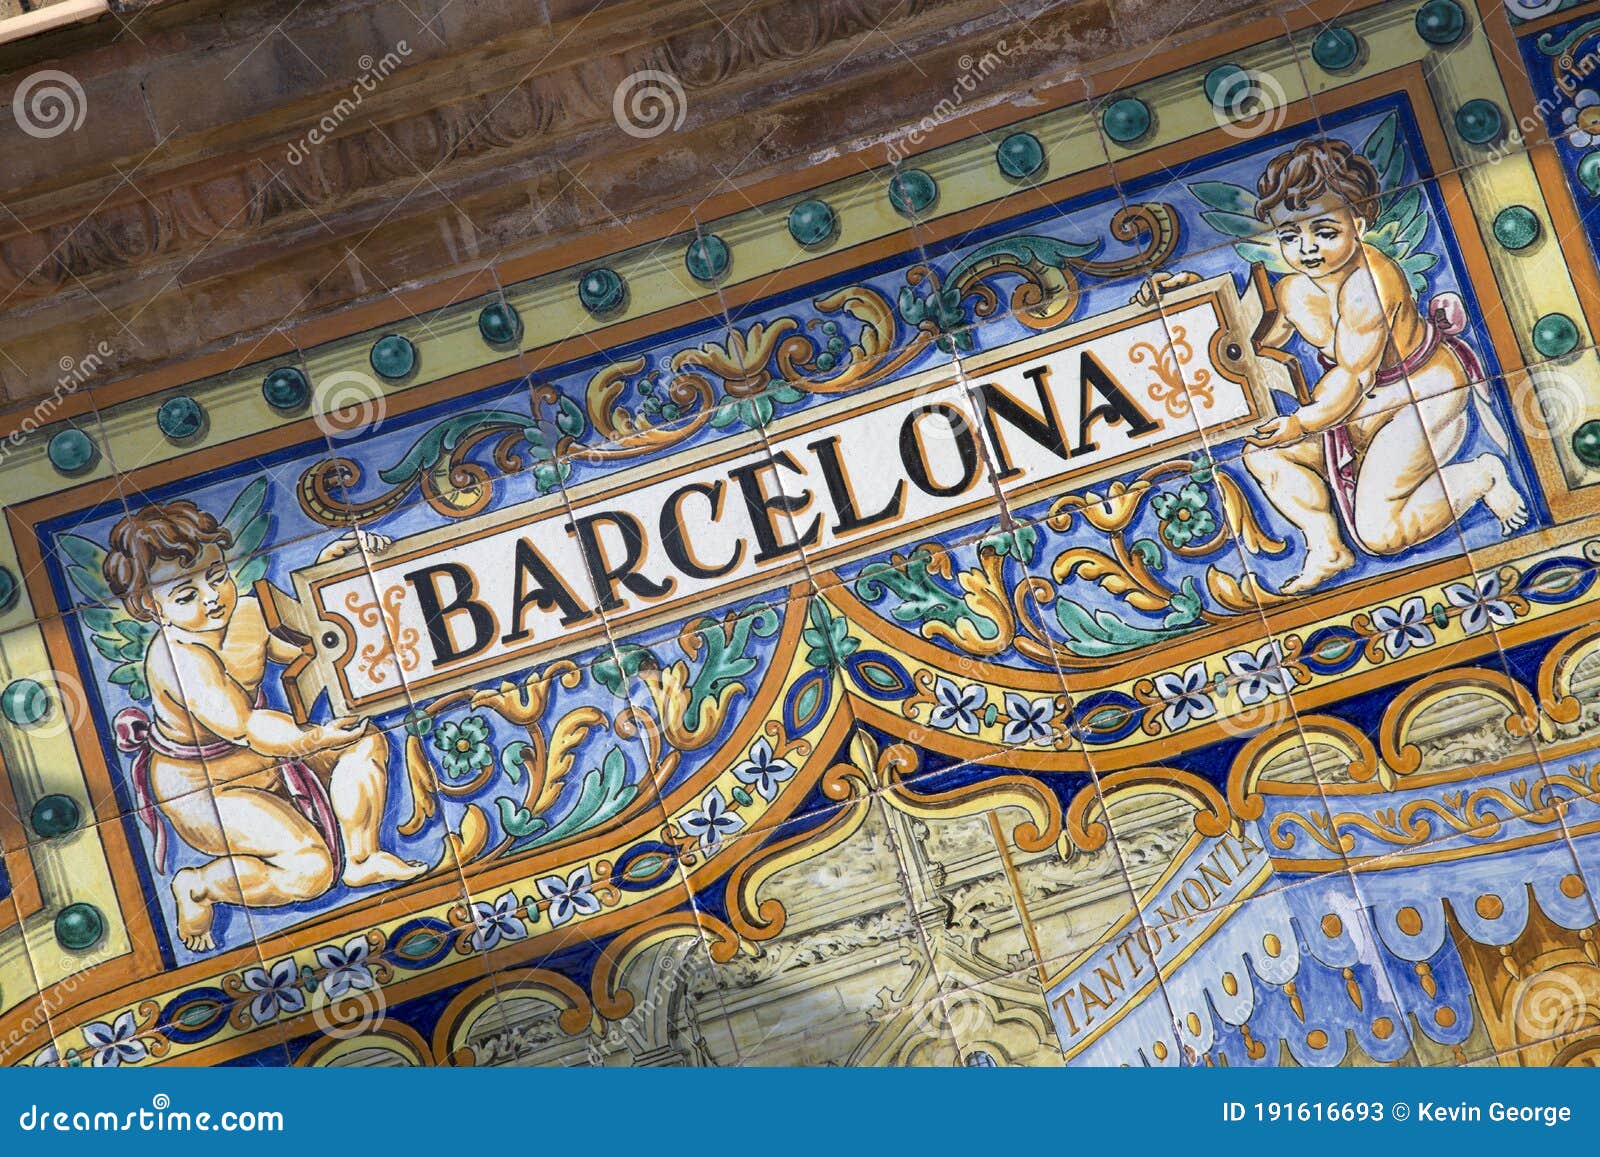 barcelona sign; plaza de espana square, seville